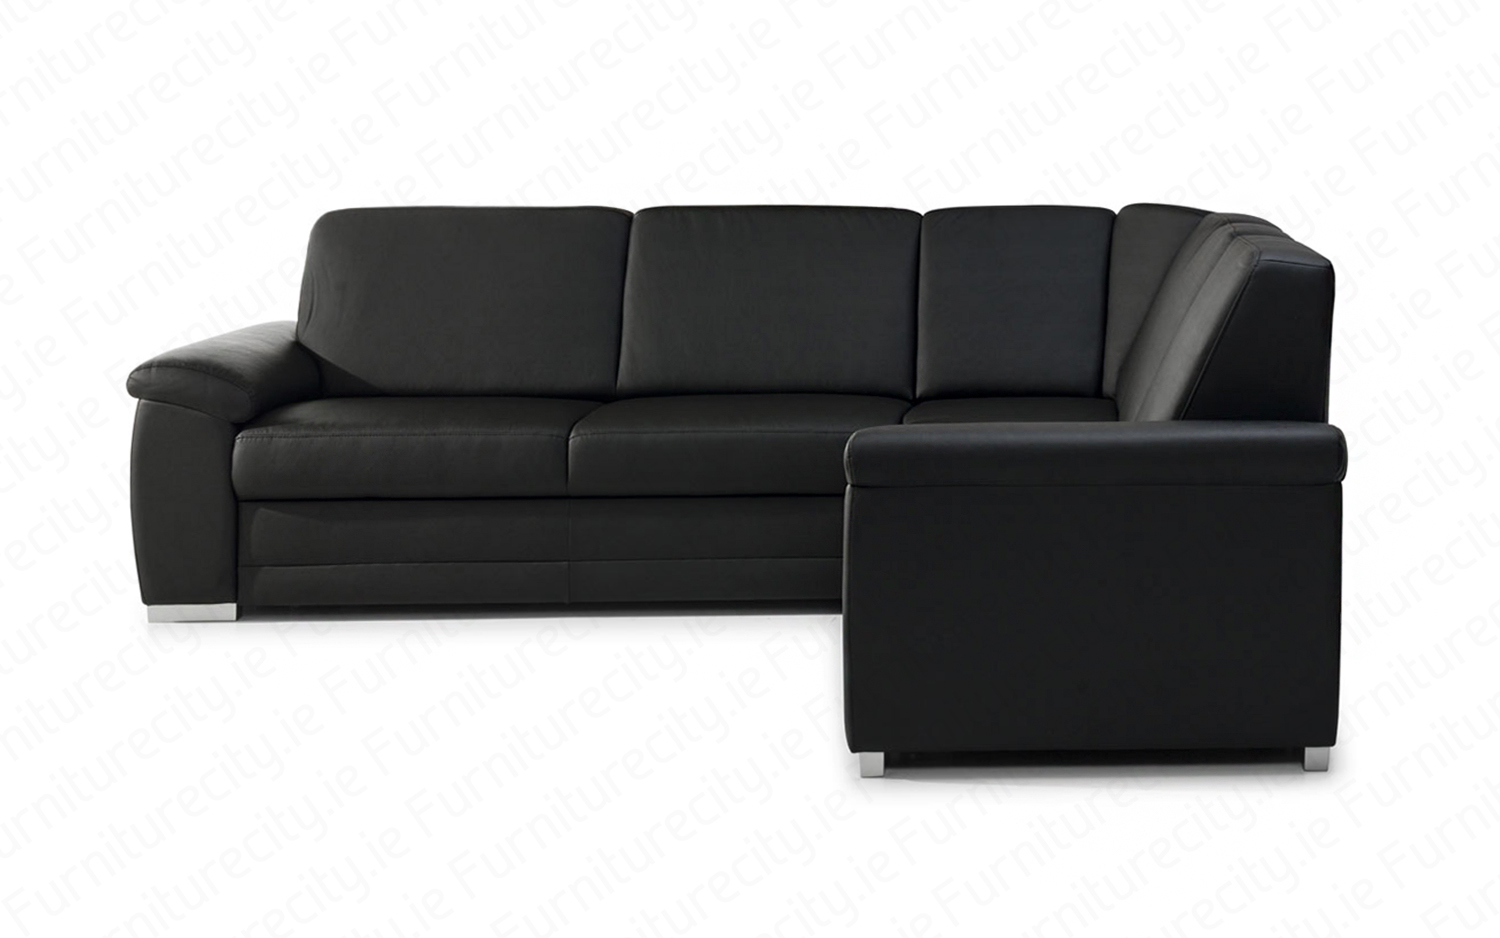 Sofa bed BORELLO XL by Furniturecity.ie